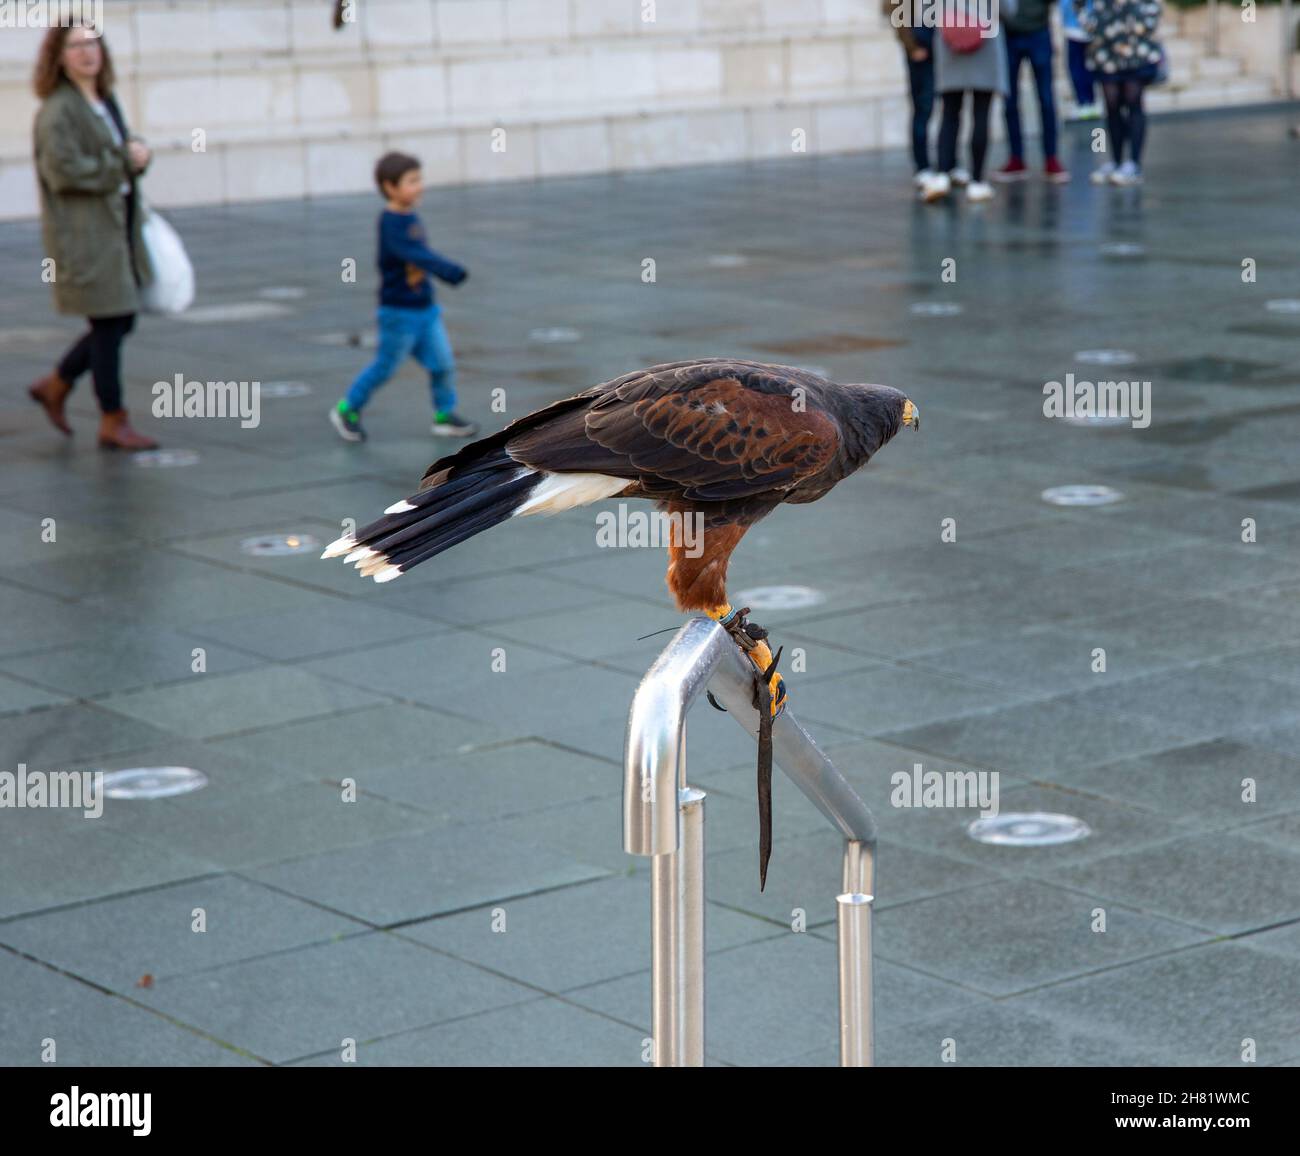 DORCHESTER, UNITED KINGDOM - Oct 25, 2021: A bird of prey in Brewery Square in Dorchester, United Kingdom Stock Photo